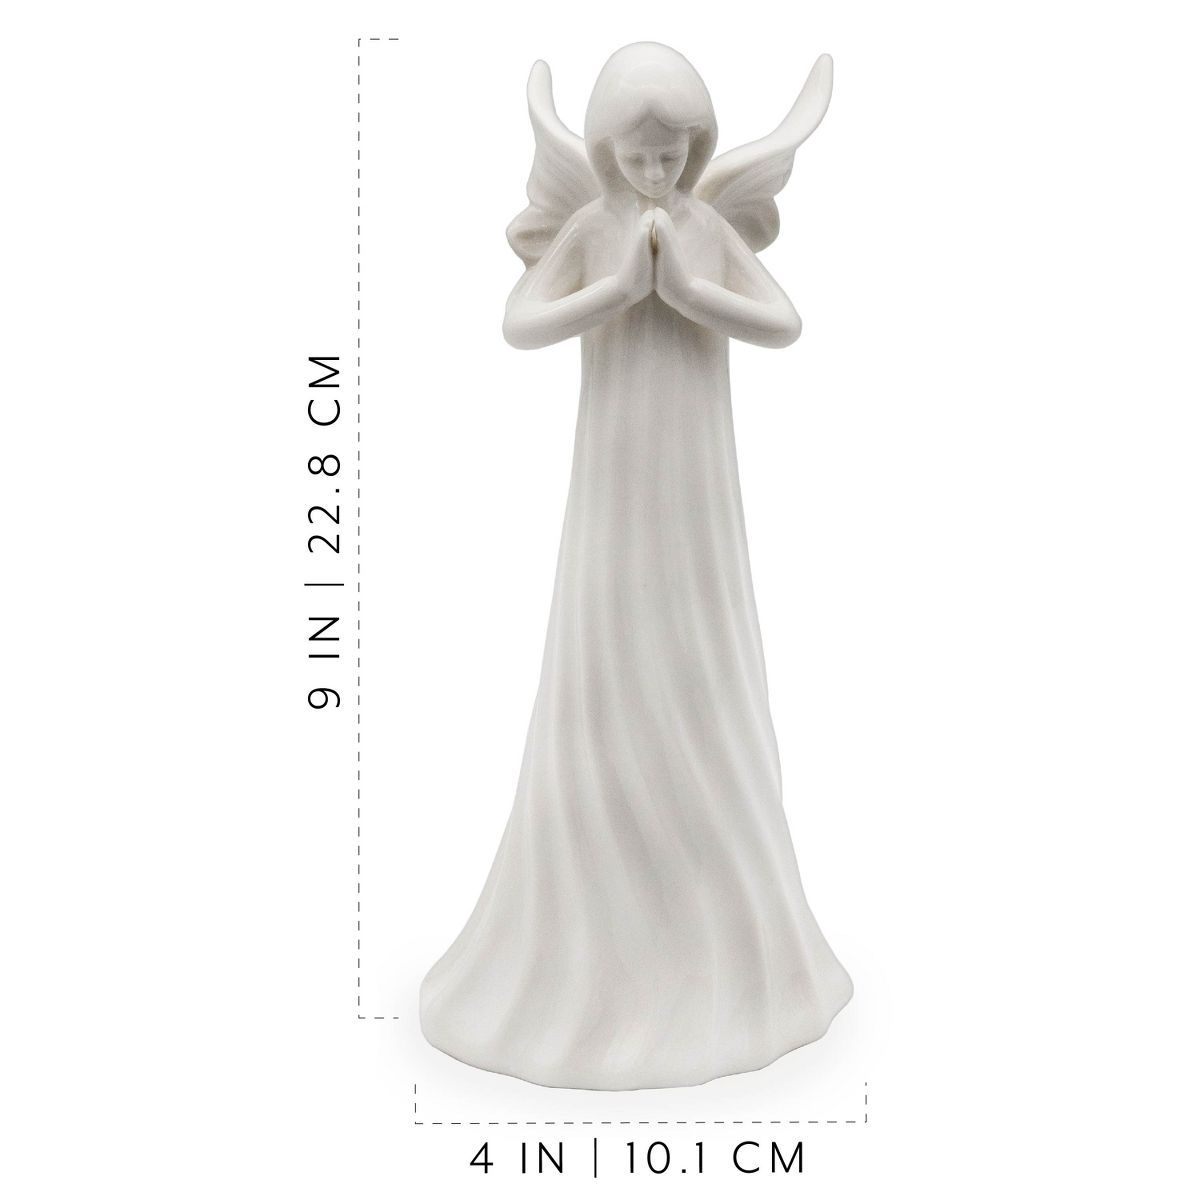 Auldhome Design-9in Praying Angel Figurine, Standing Guardian Angel Statue White Ceramic | Target